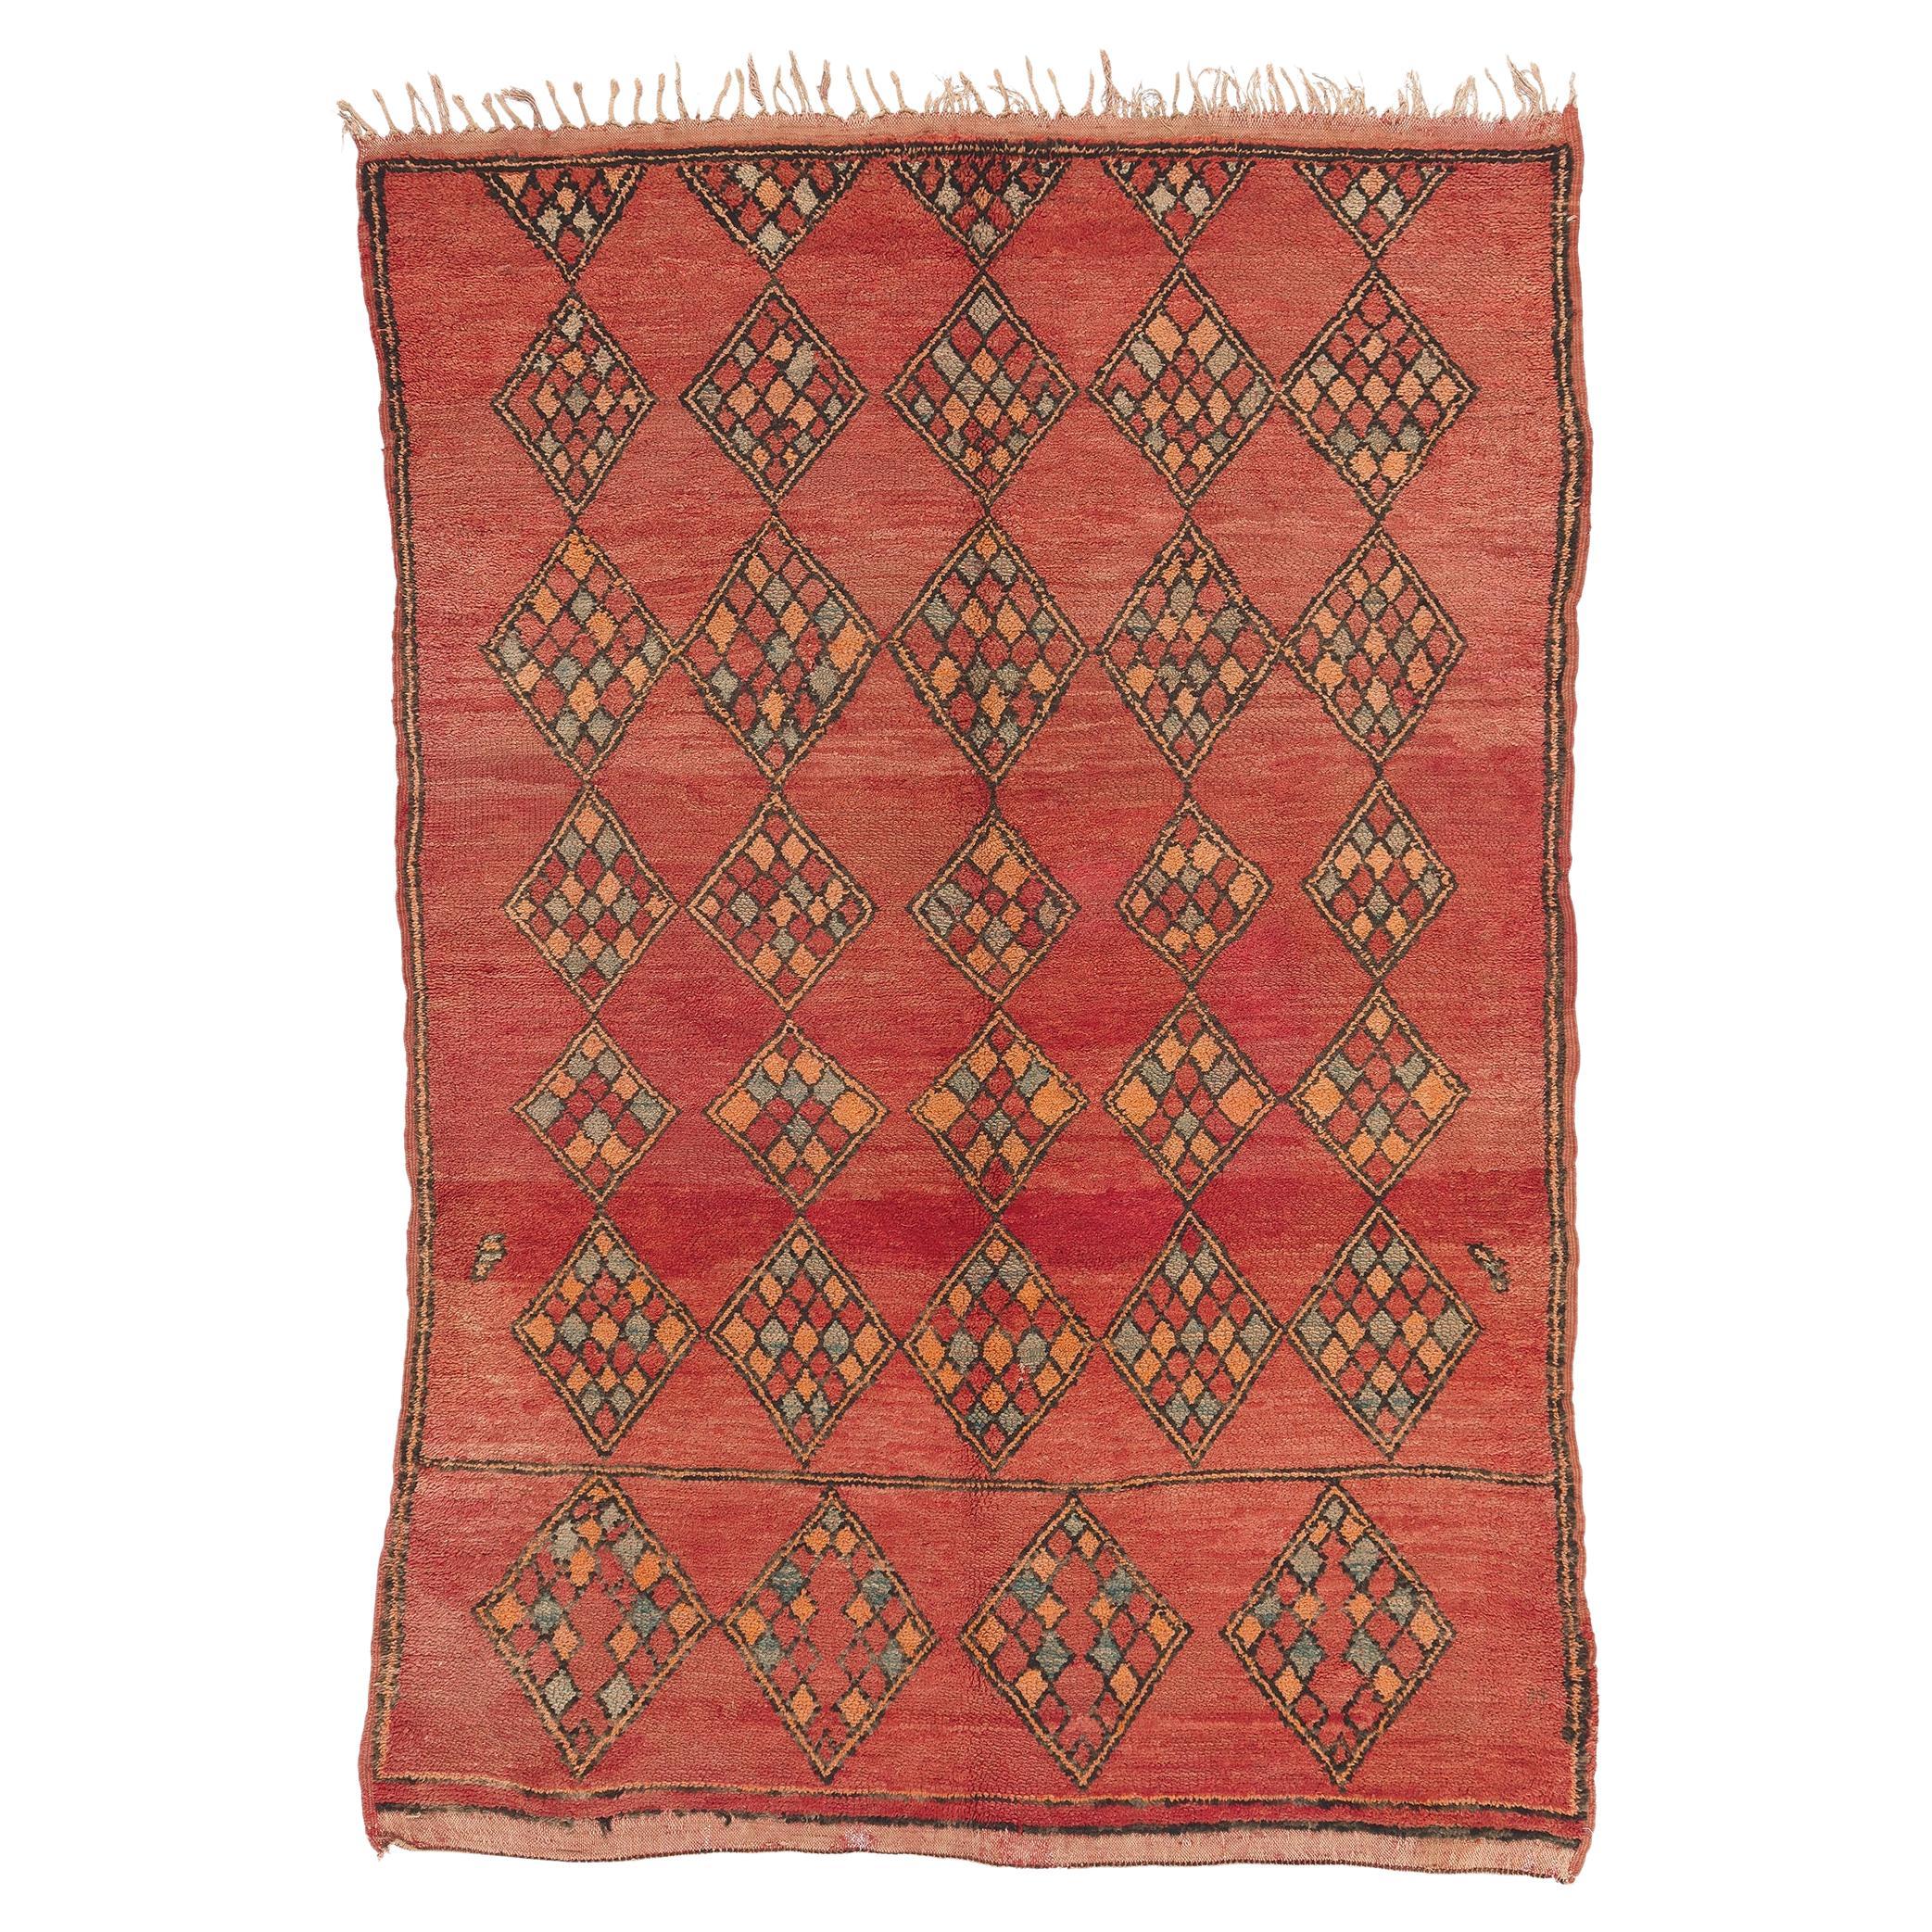 Vintage Boujad Moroccan Rug, Boho Chic Meets Tribal Enchantment